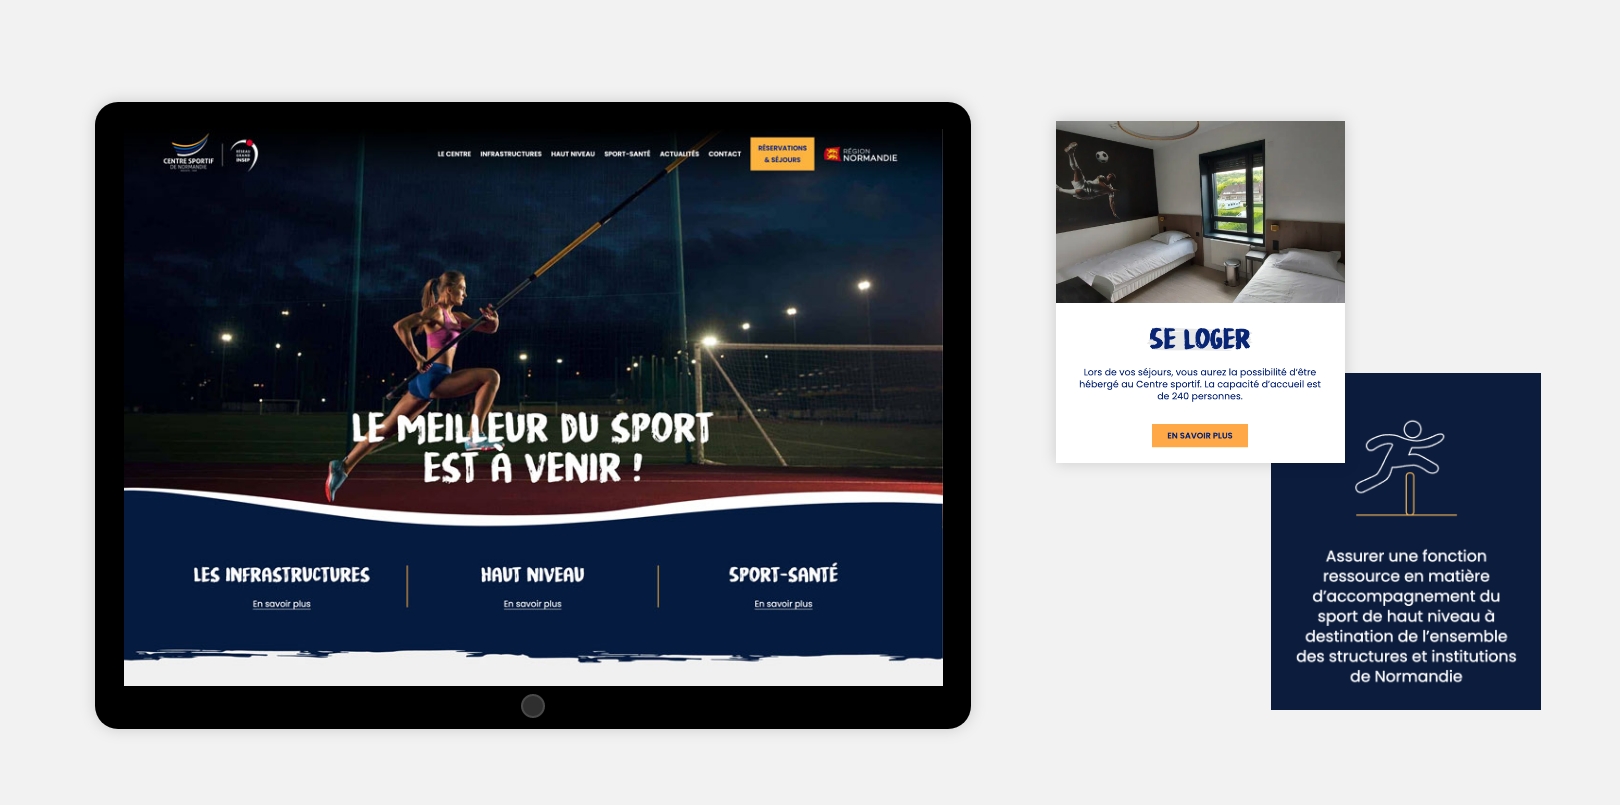 Centre sportif de Normandie site internet